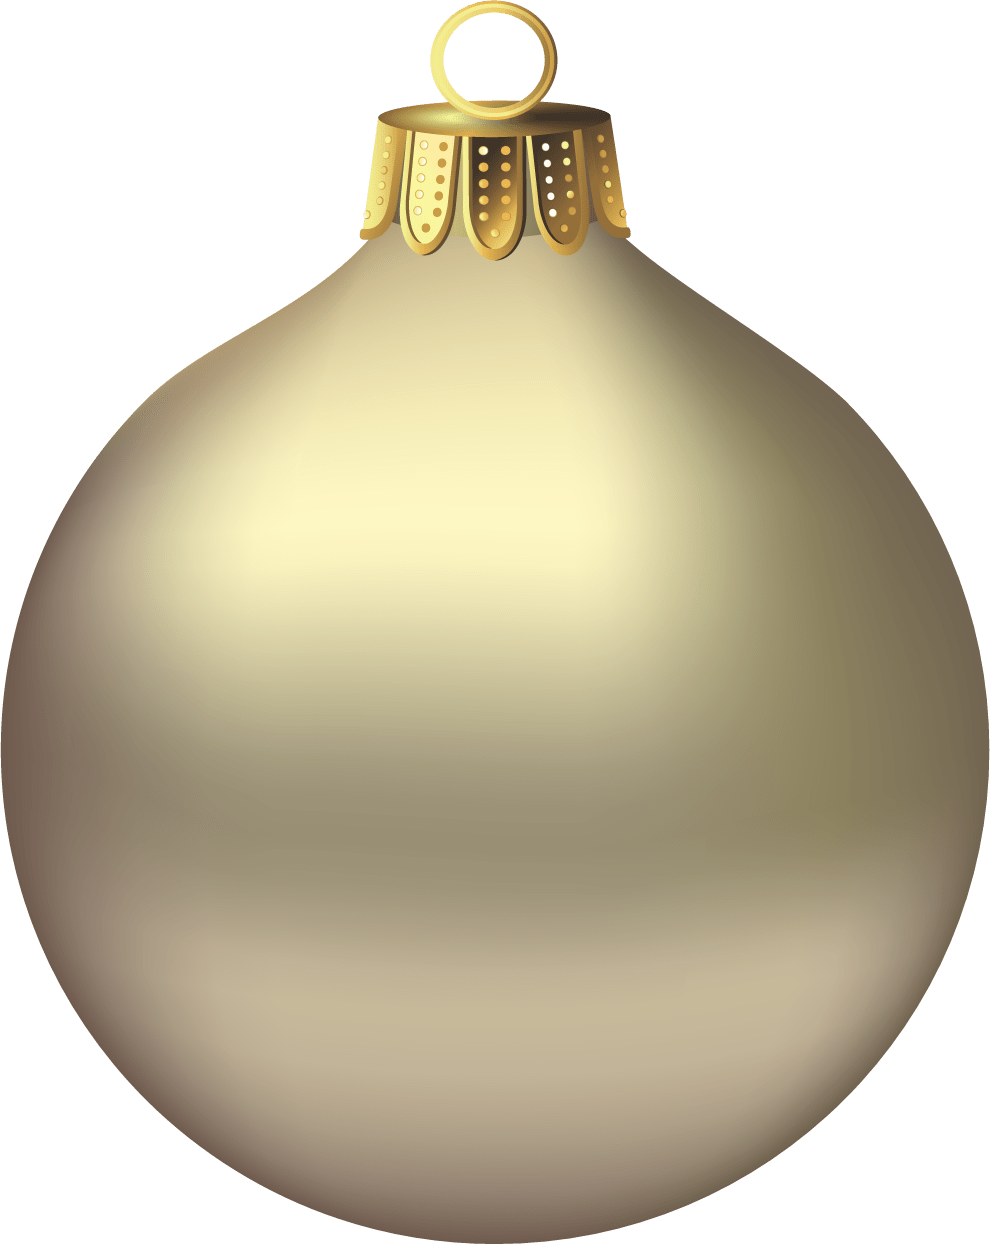 ornaments clipart silver gold decoration